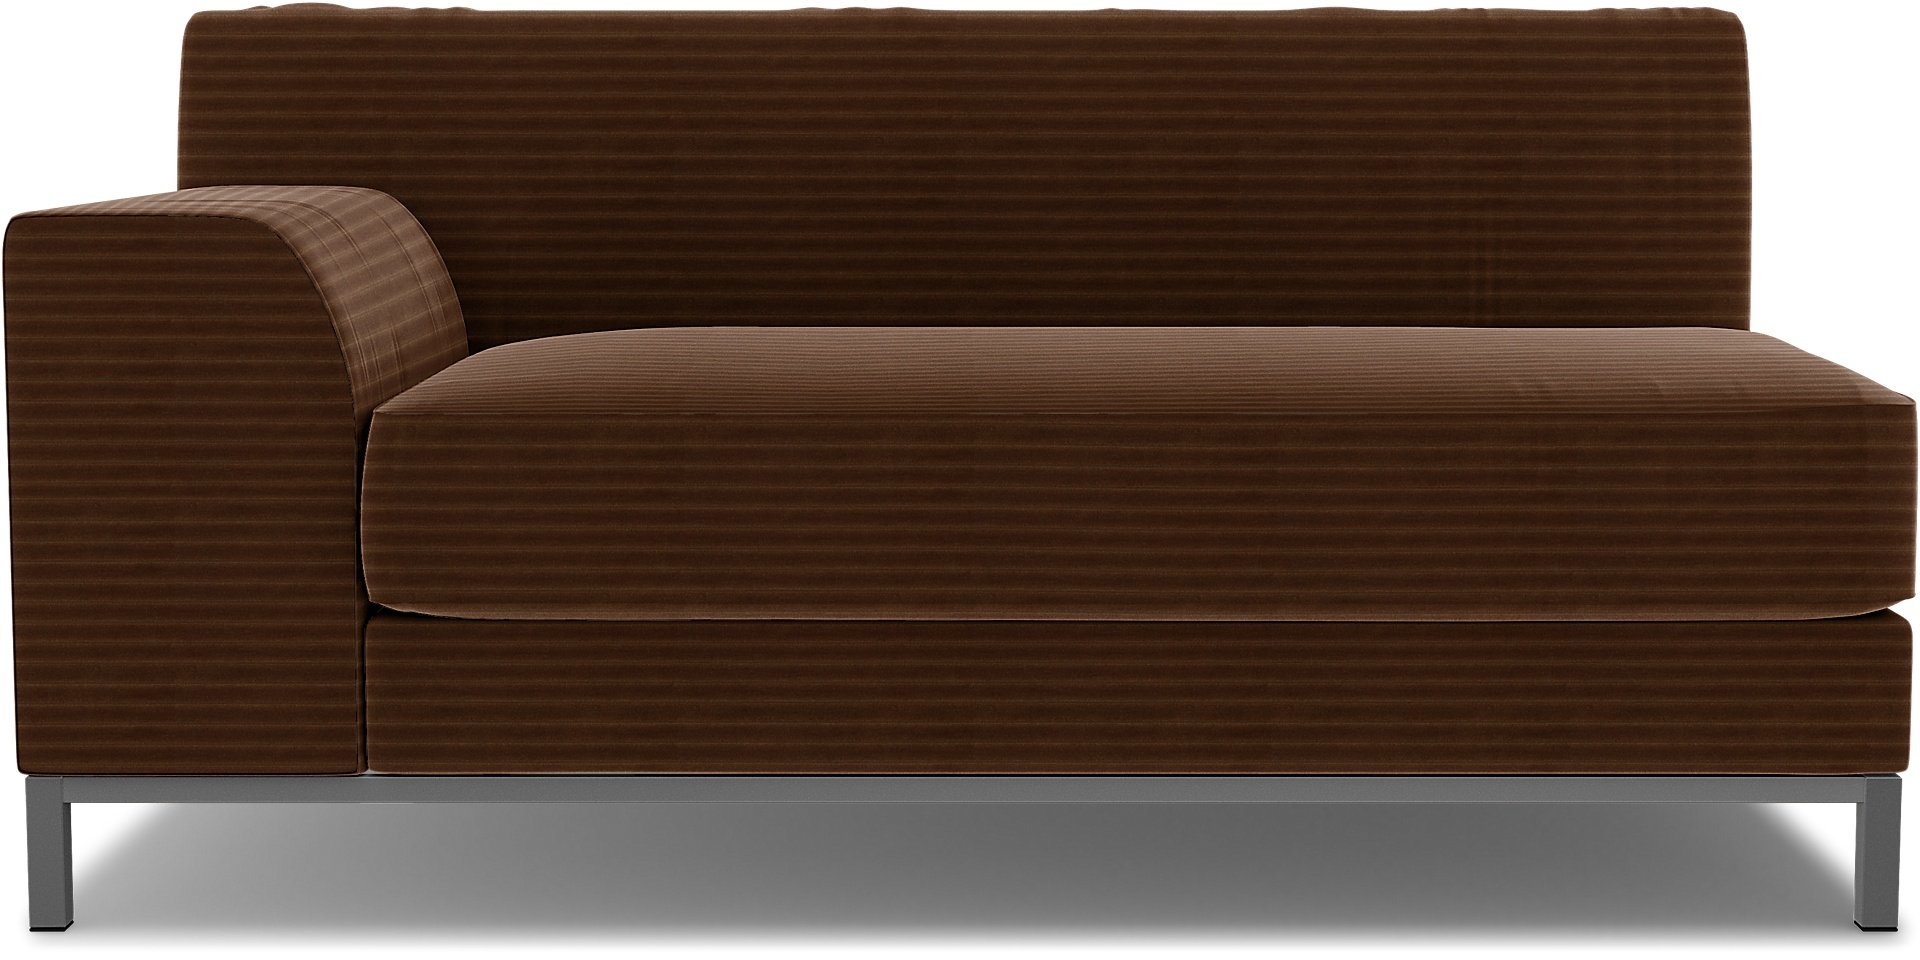 IKEA - Kramfors 2 Seater Sofa with Left Arm Cover, Chocolate Brown, Corduroy - Bemz